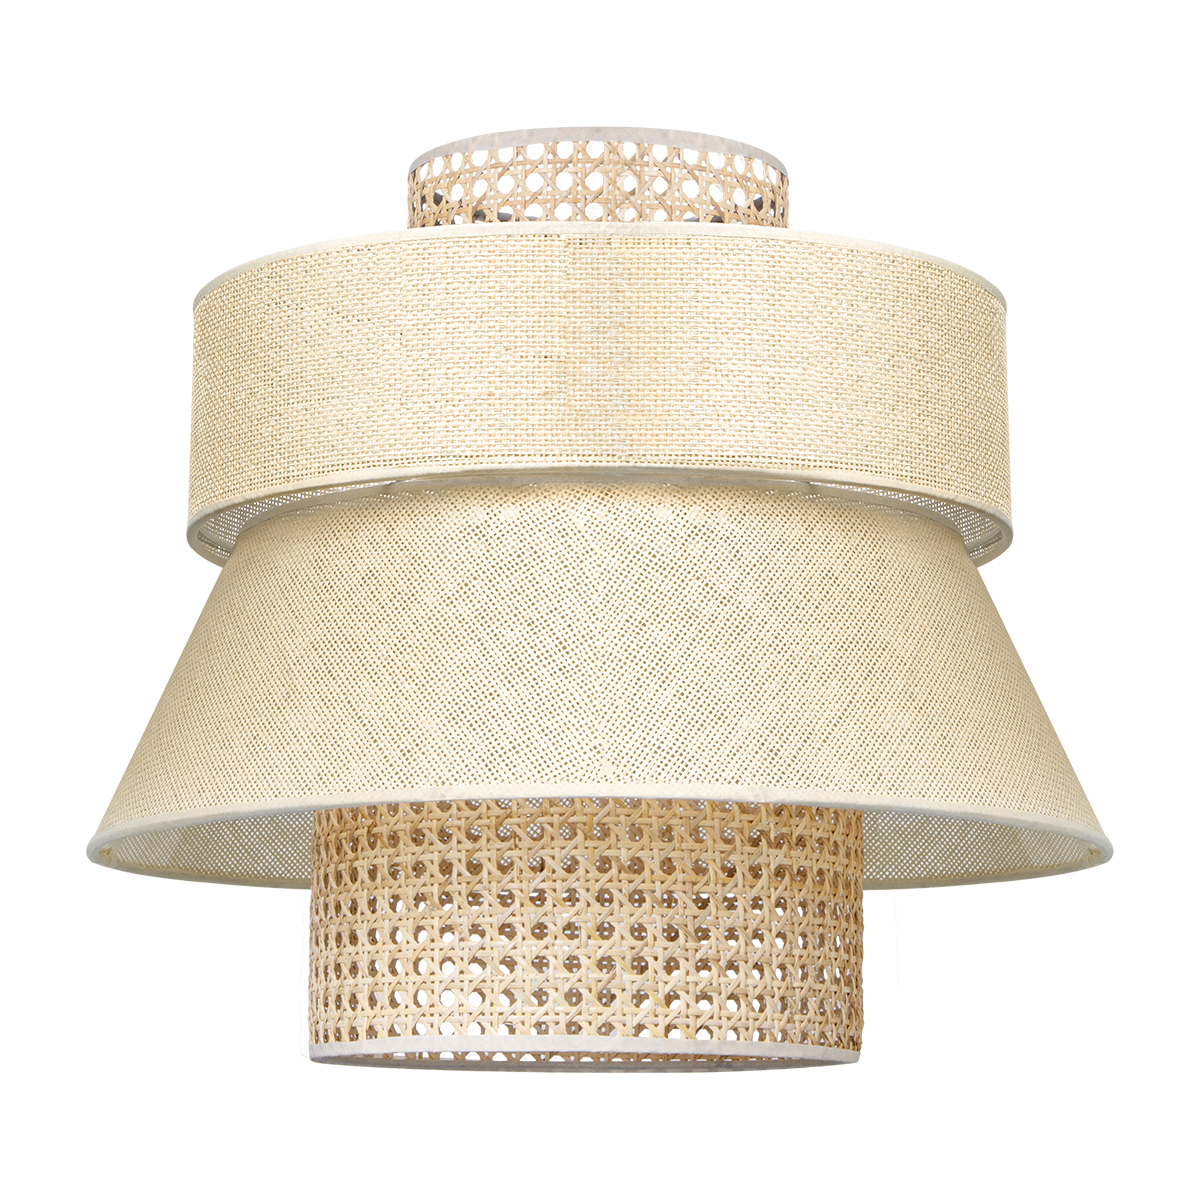 Tangla lighting - TLS7017-01NT - Lampshade - paper rattan and linen - natural - eaves - diameter 46cm - E27